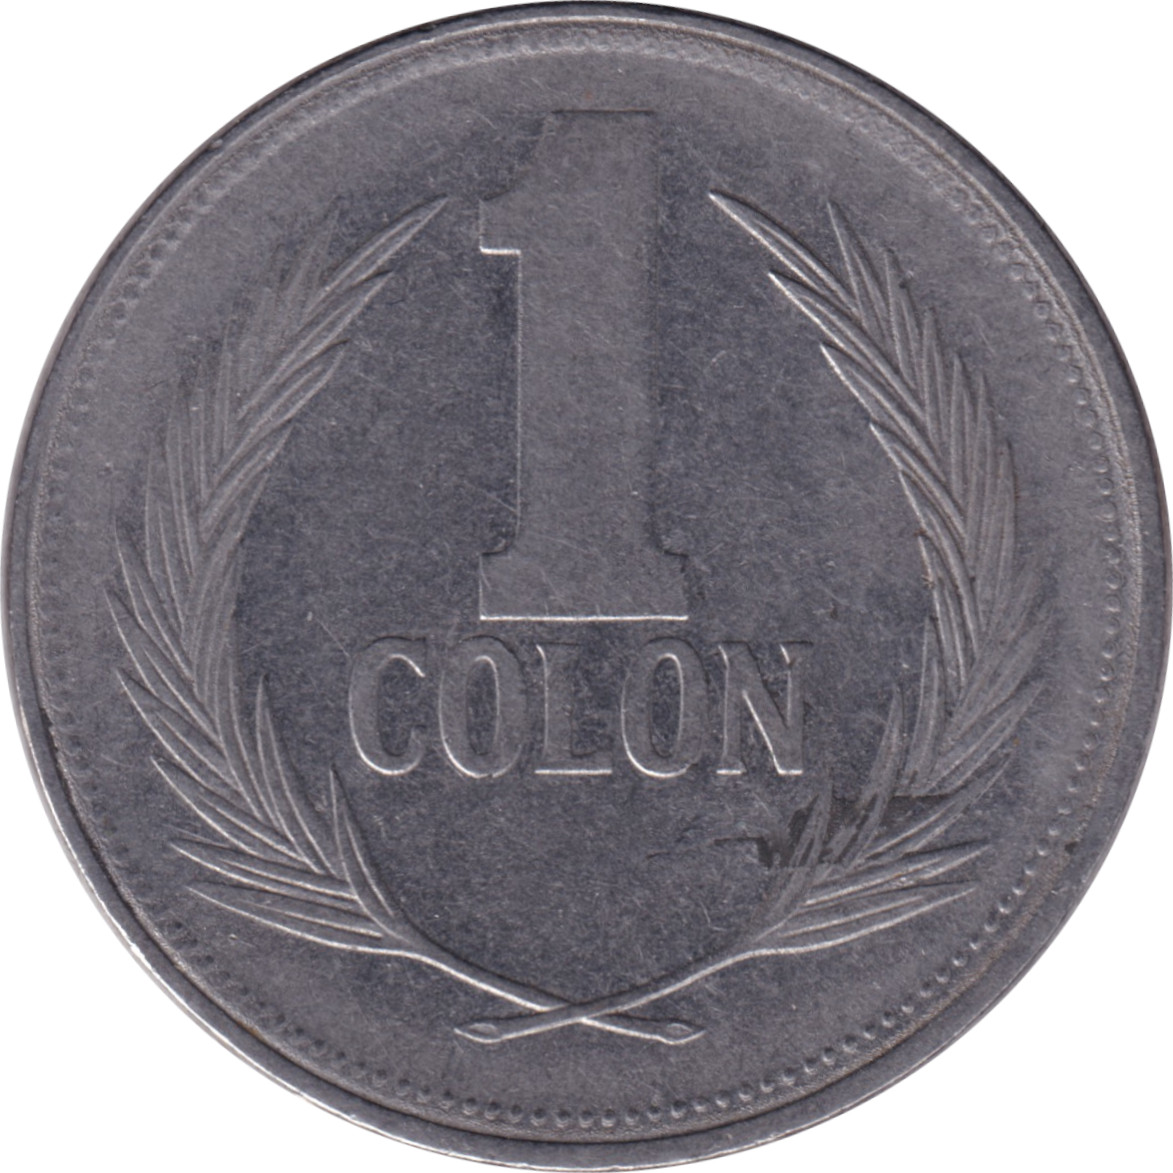 1 colon - Christophe Colomb - Type 2